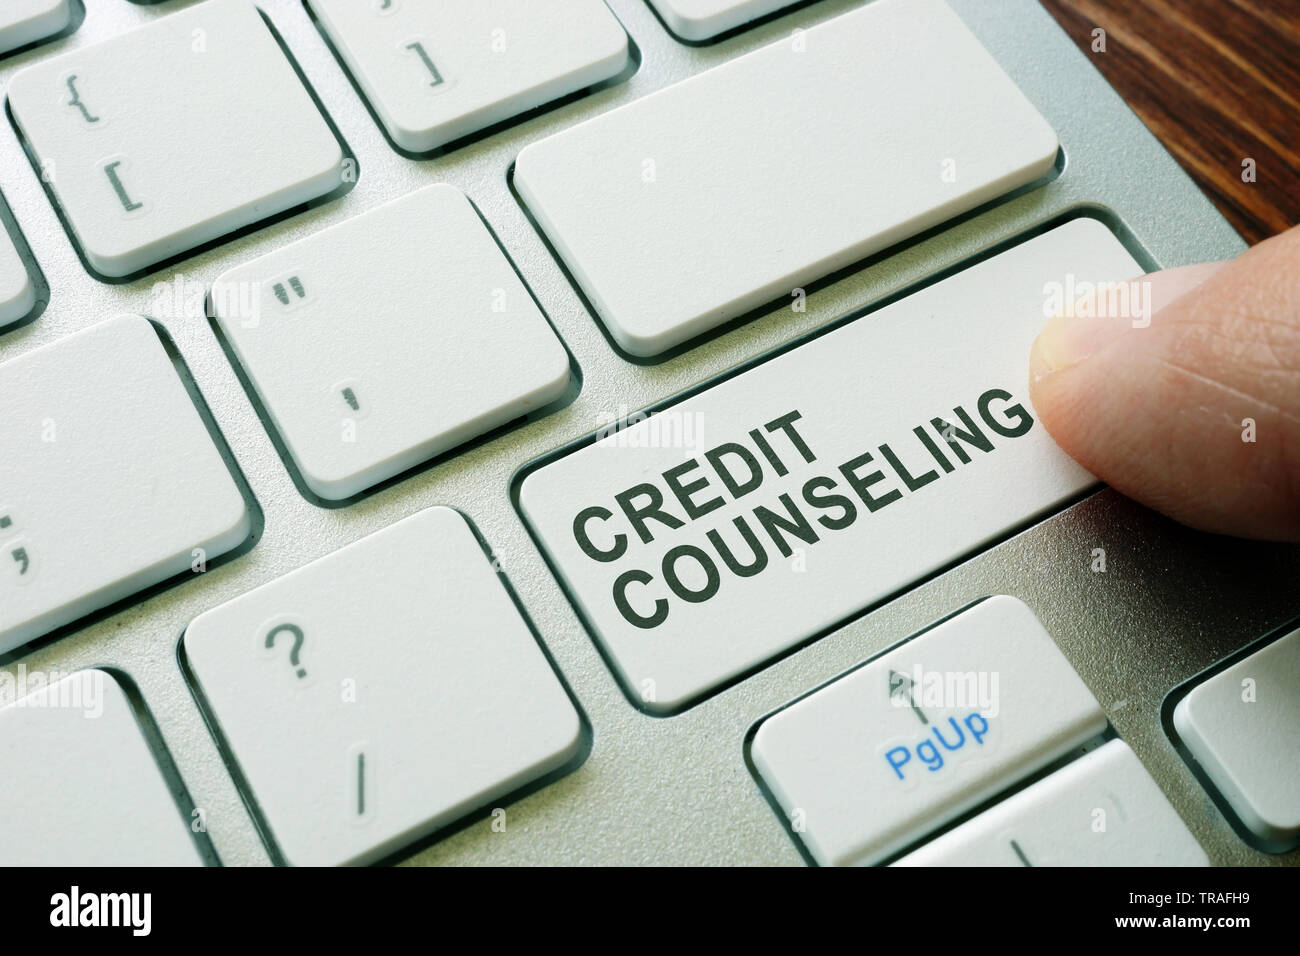 Man pushing button credit counseling on keyboard. Debt advice. Stock Photo